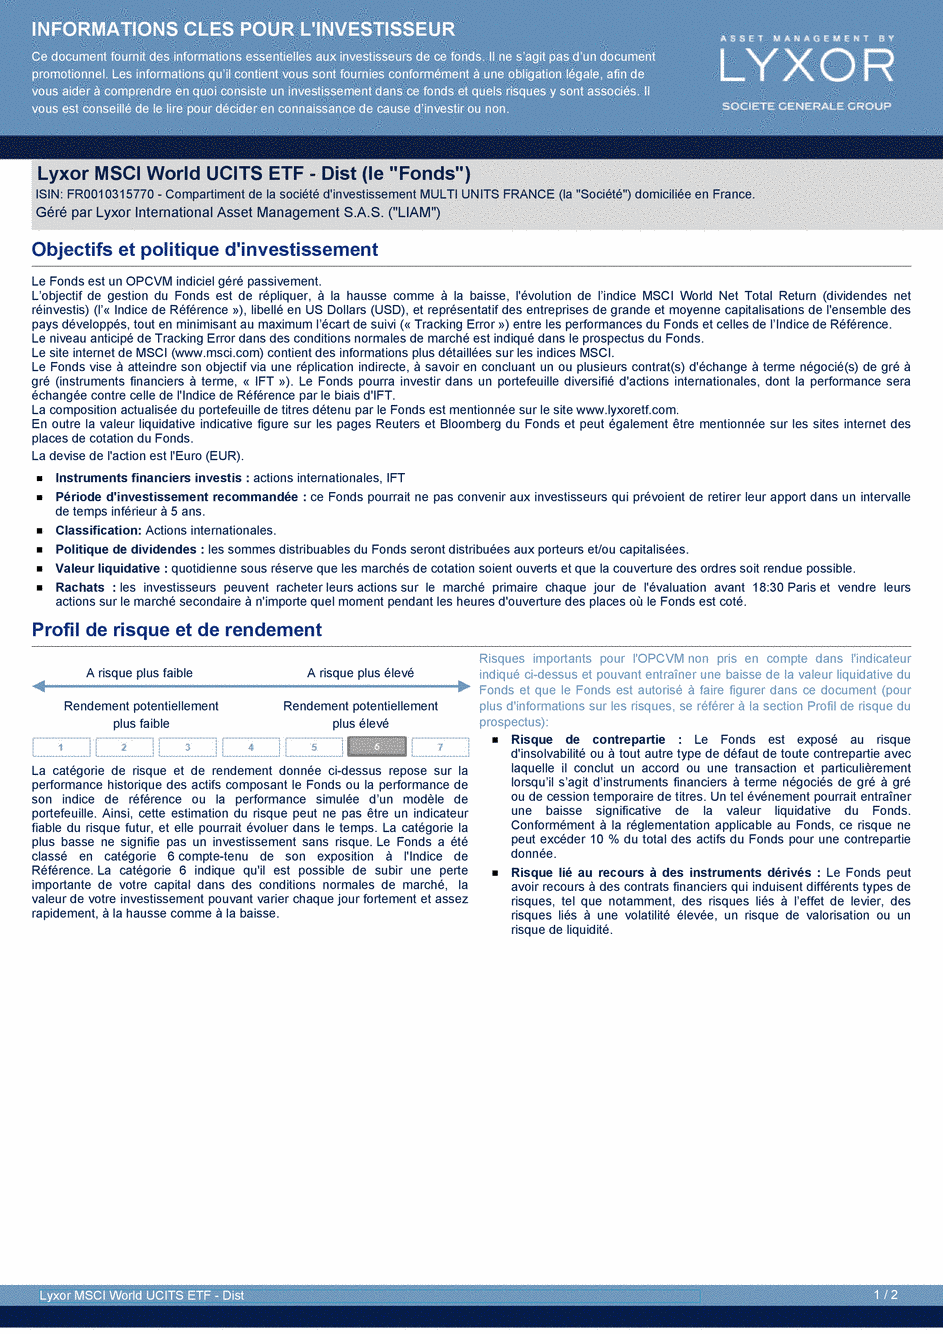 DICI Lyxor MSCI World UCITS ETF - Dist - 19/02/2021 - French